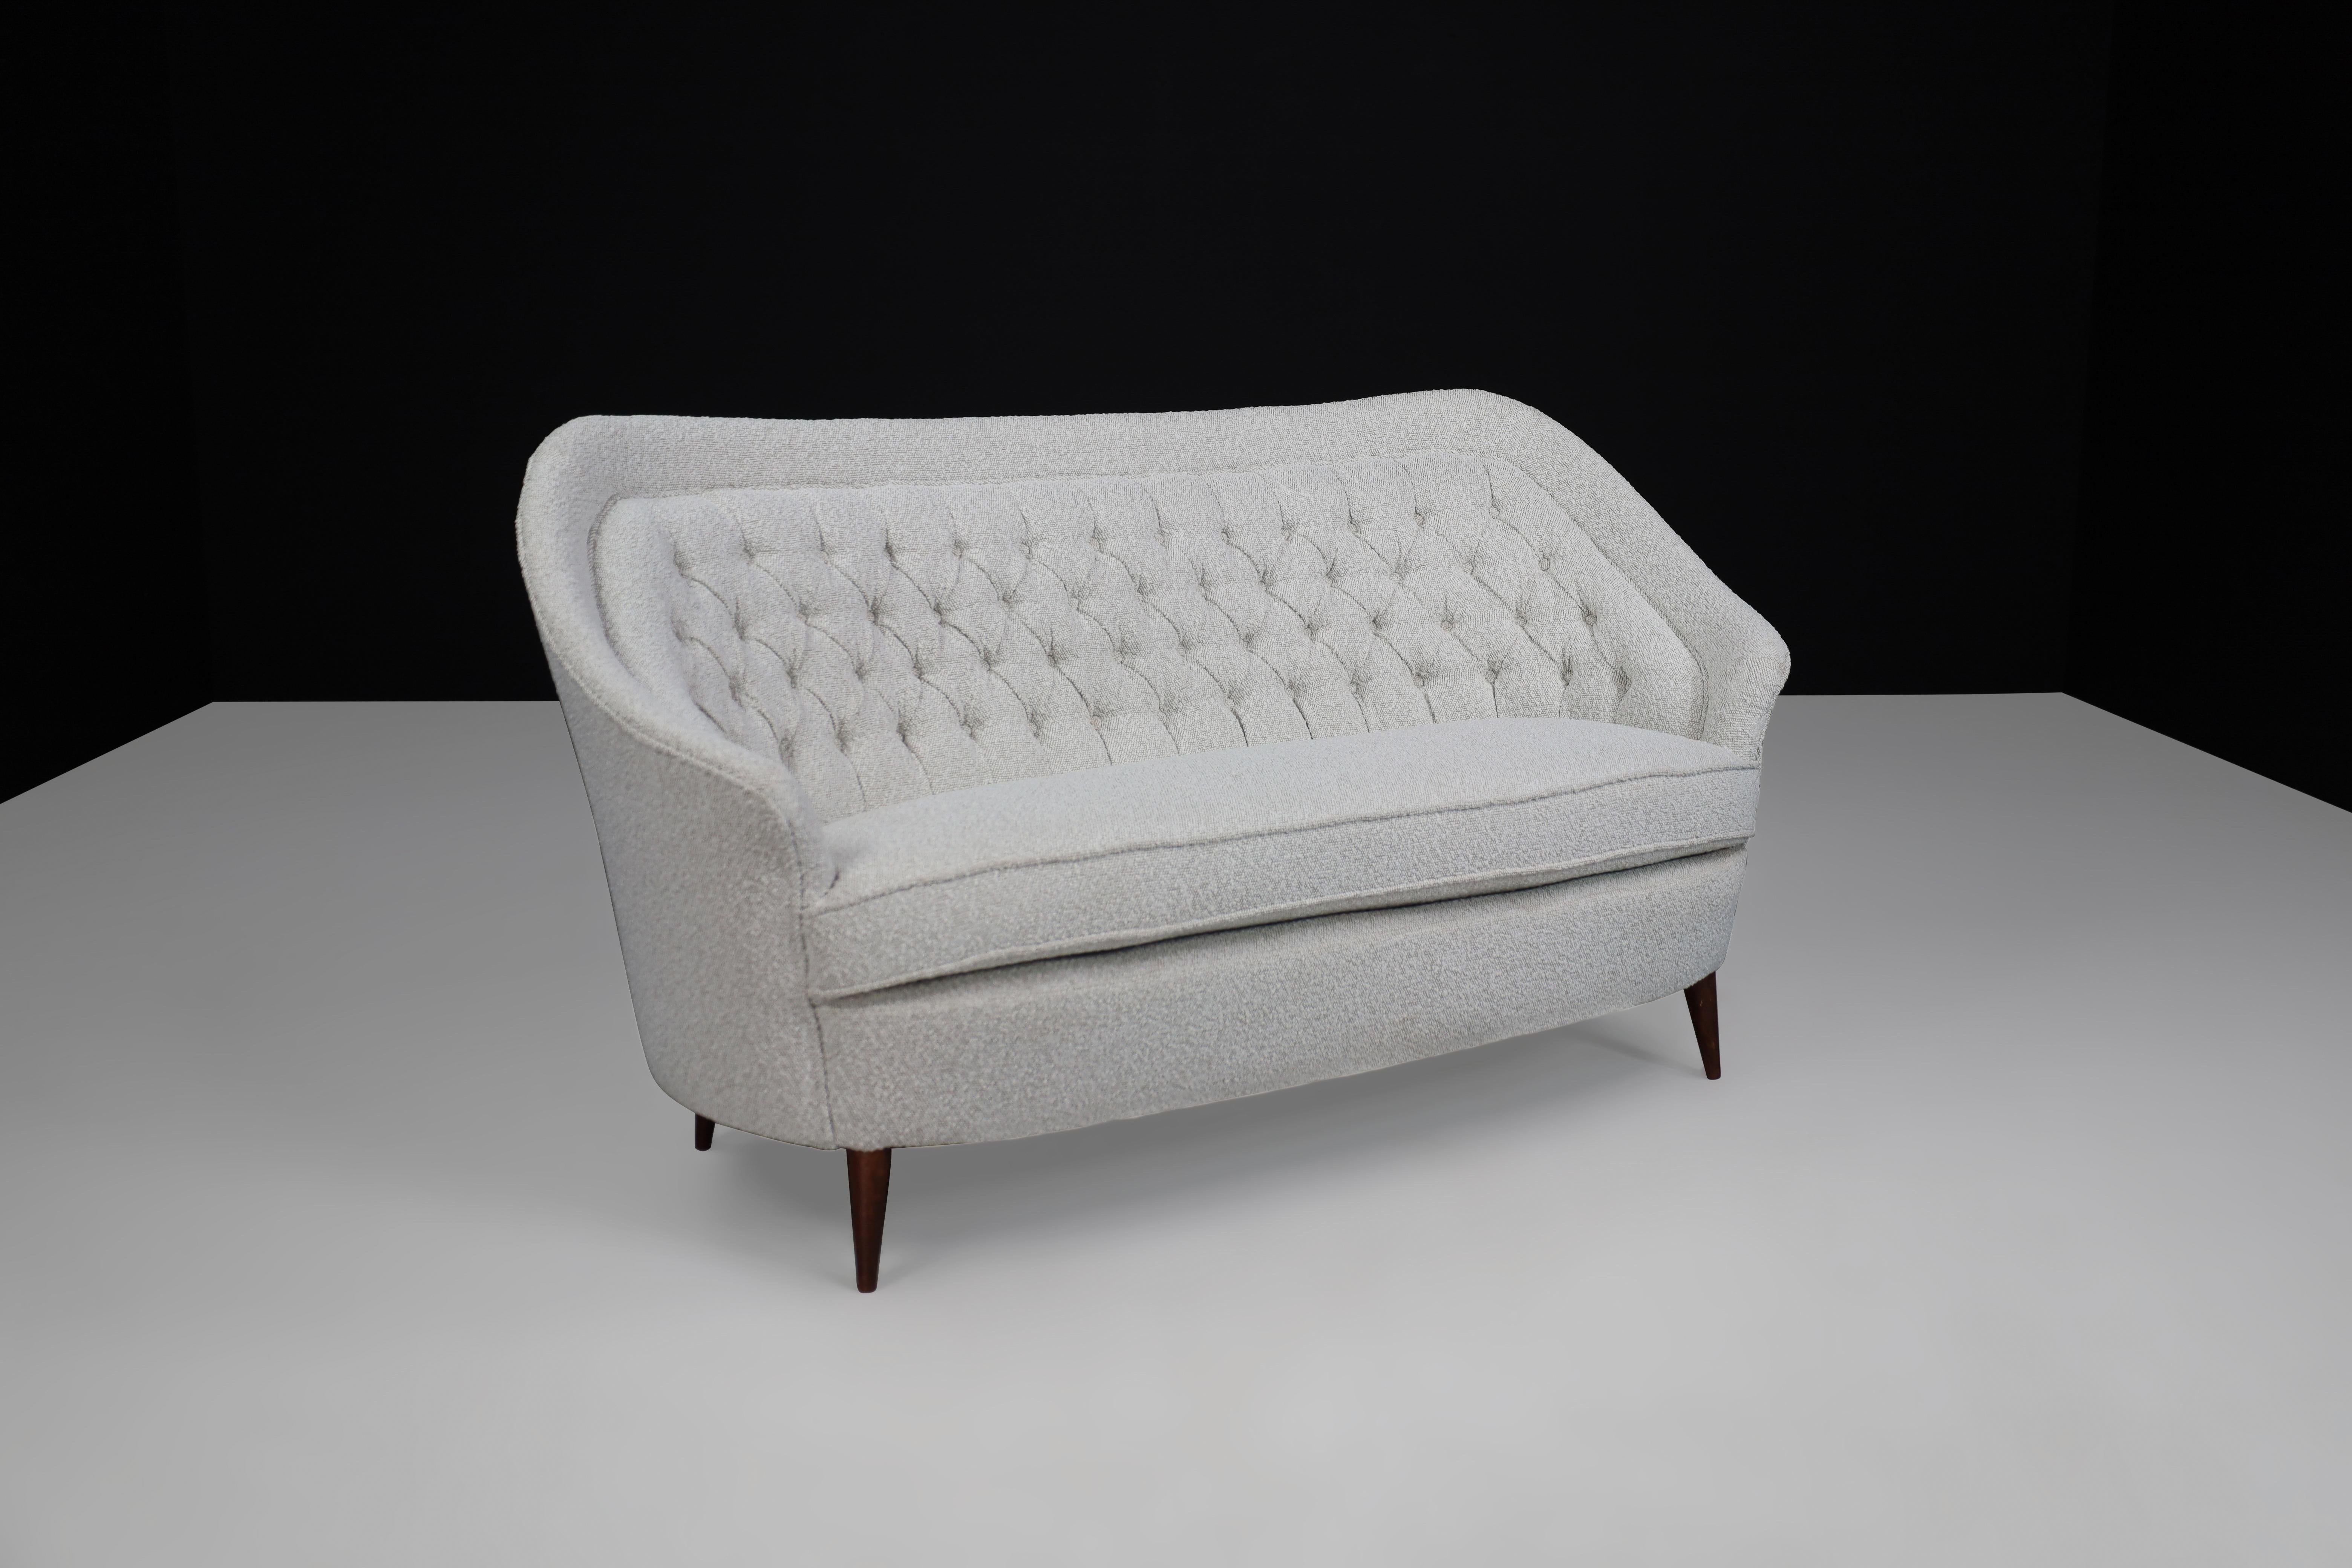 20th Century Gio Ponti for Casa E Giardino Midcentury Sofa in Bouclé Upholstery Italy 1940s  For Sale